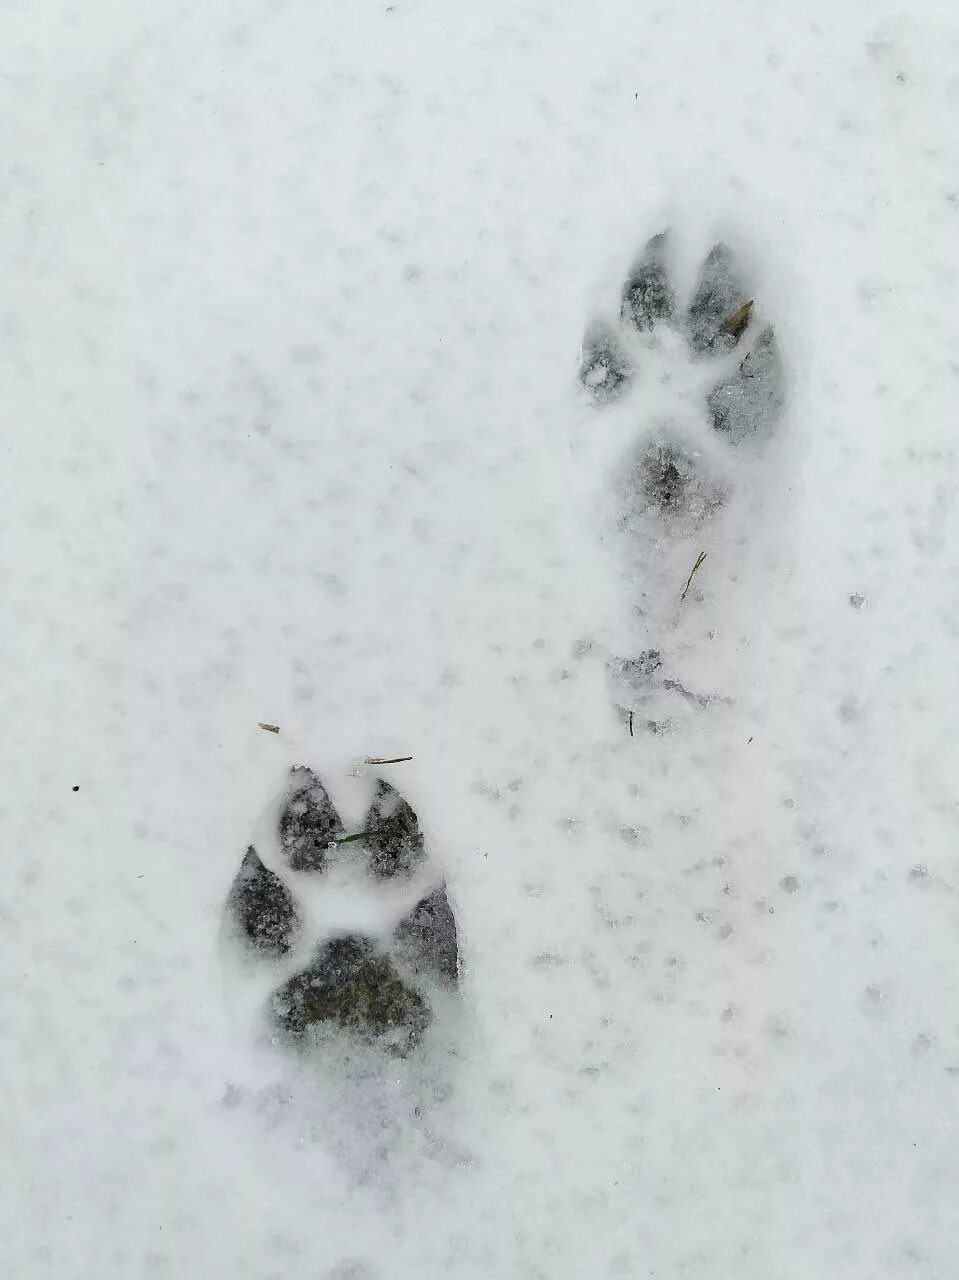 Следы лис. Волчий след фильм 2009. След енотовидной собаки на земле. Волчий след на снегу и собачий. Следы енотовидной собаки на снегу.